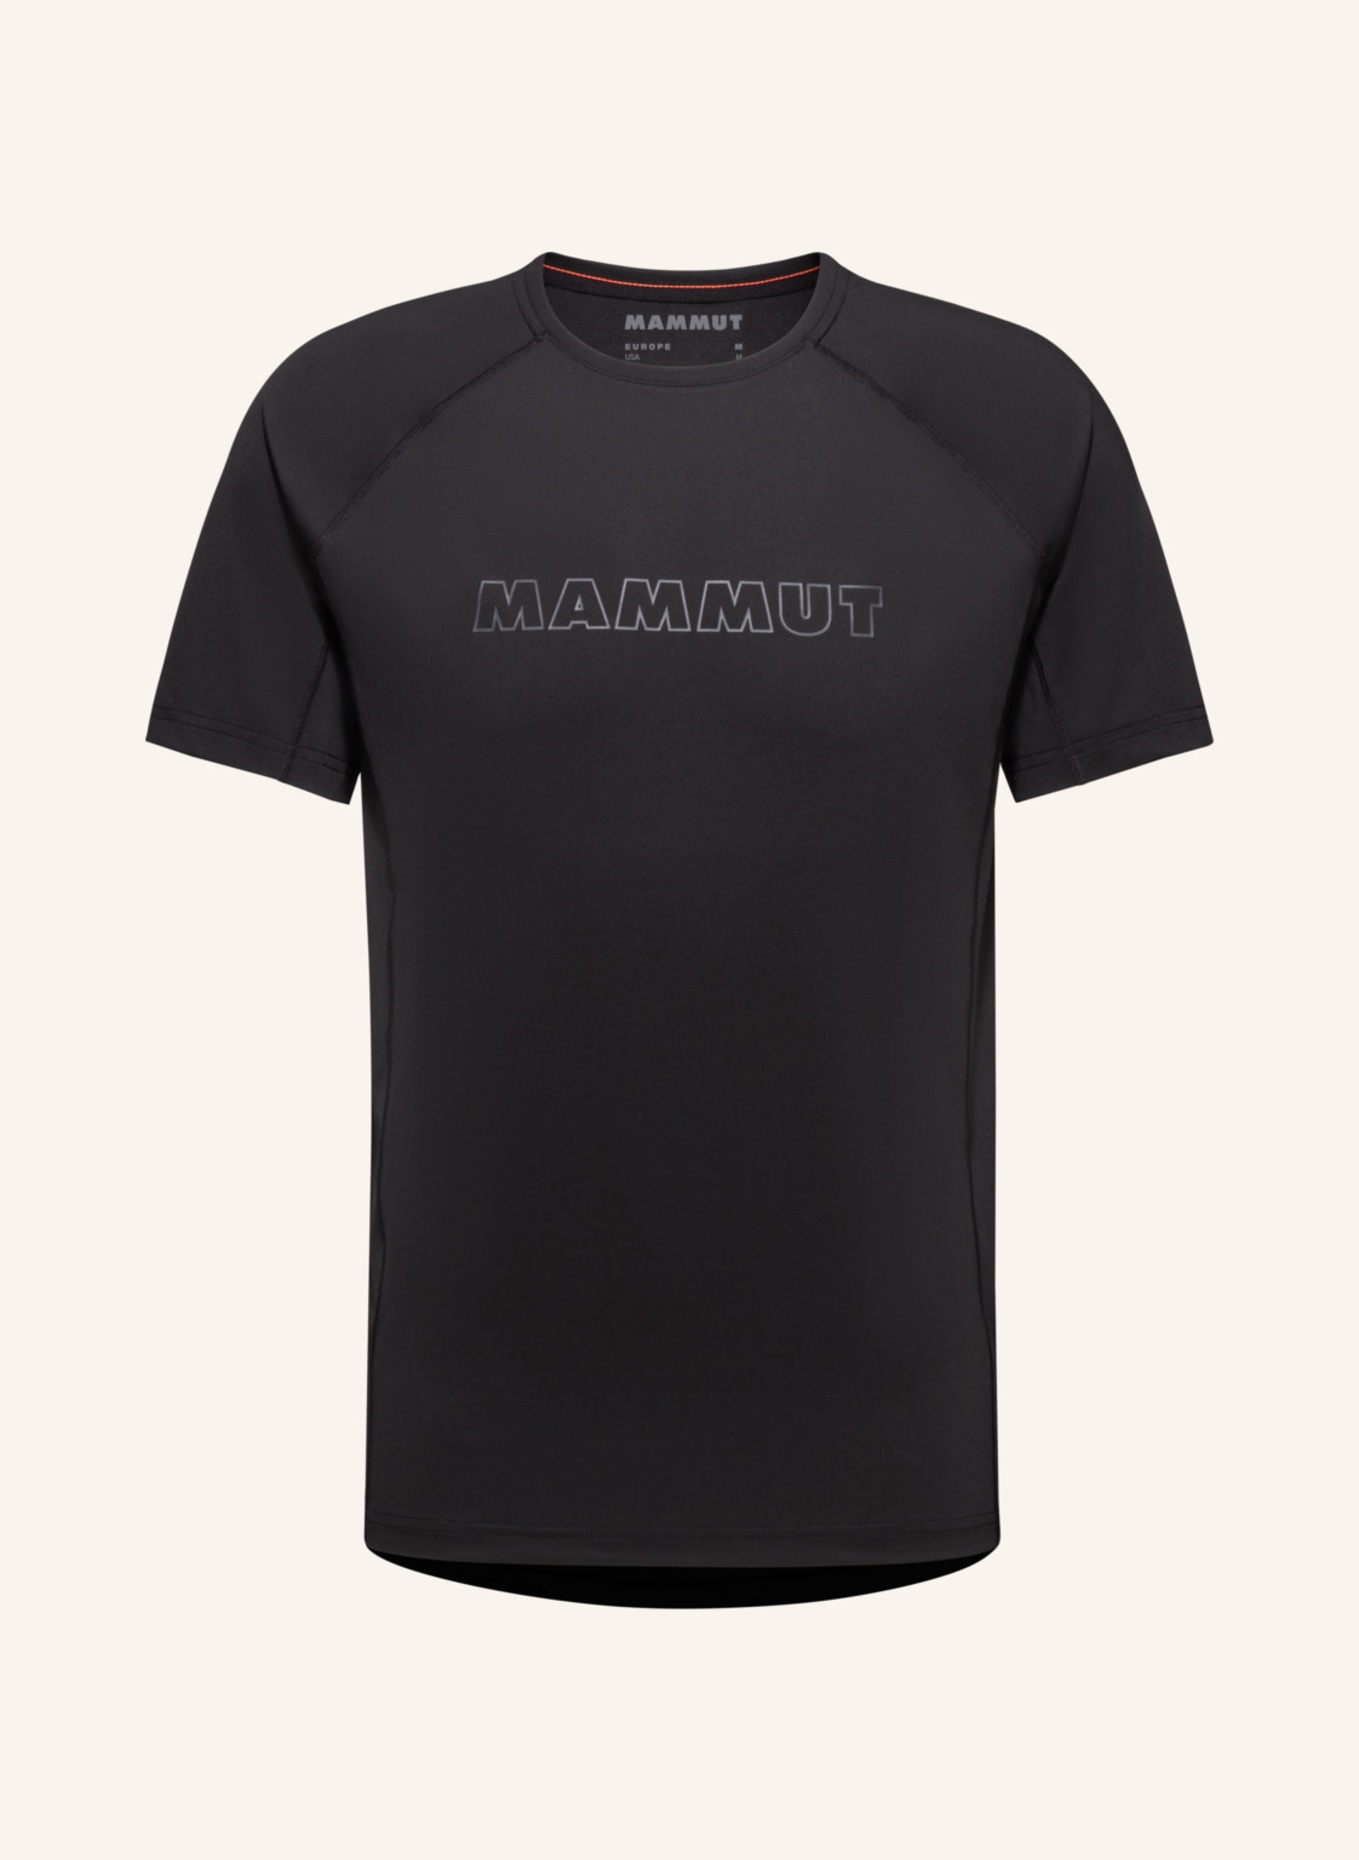 MAMMUT Mammut Selun FL T-Shirt Men Logo, Farbe: SCHWARZ (Bild 1)